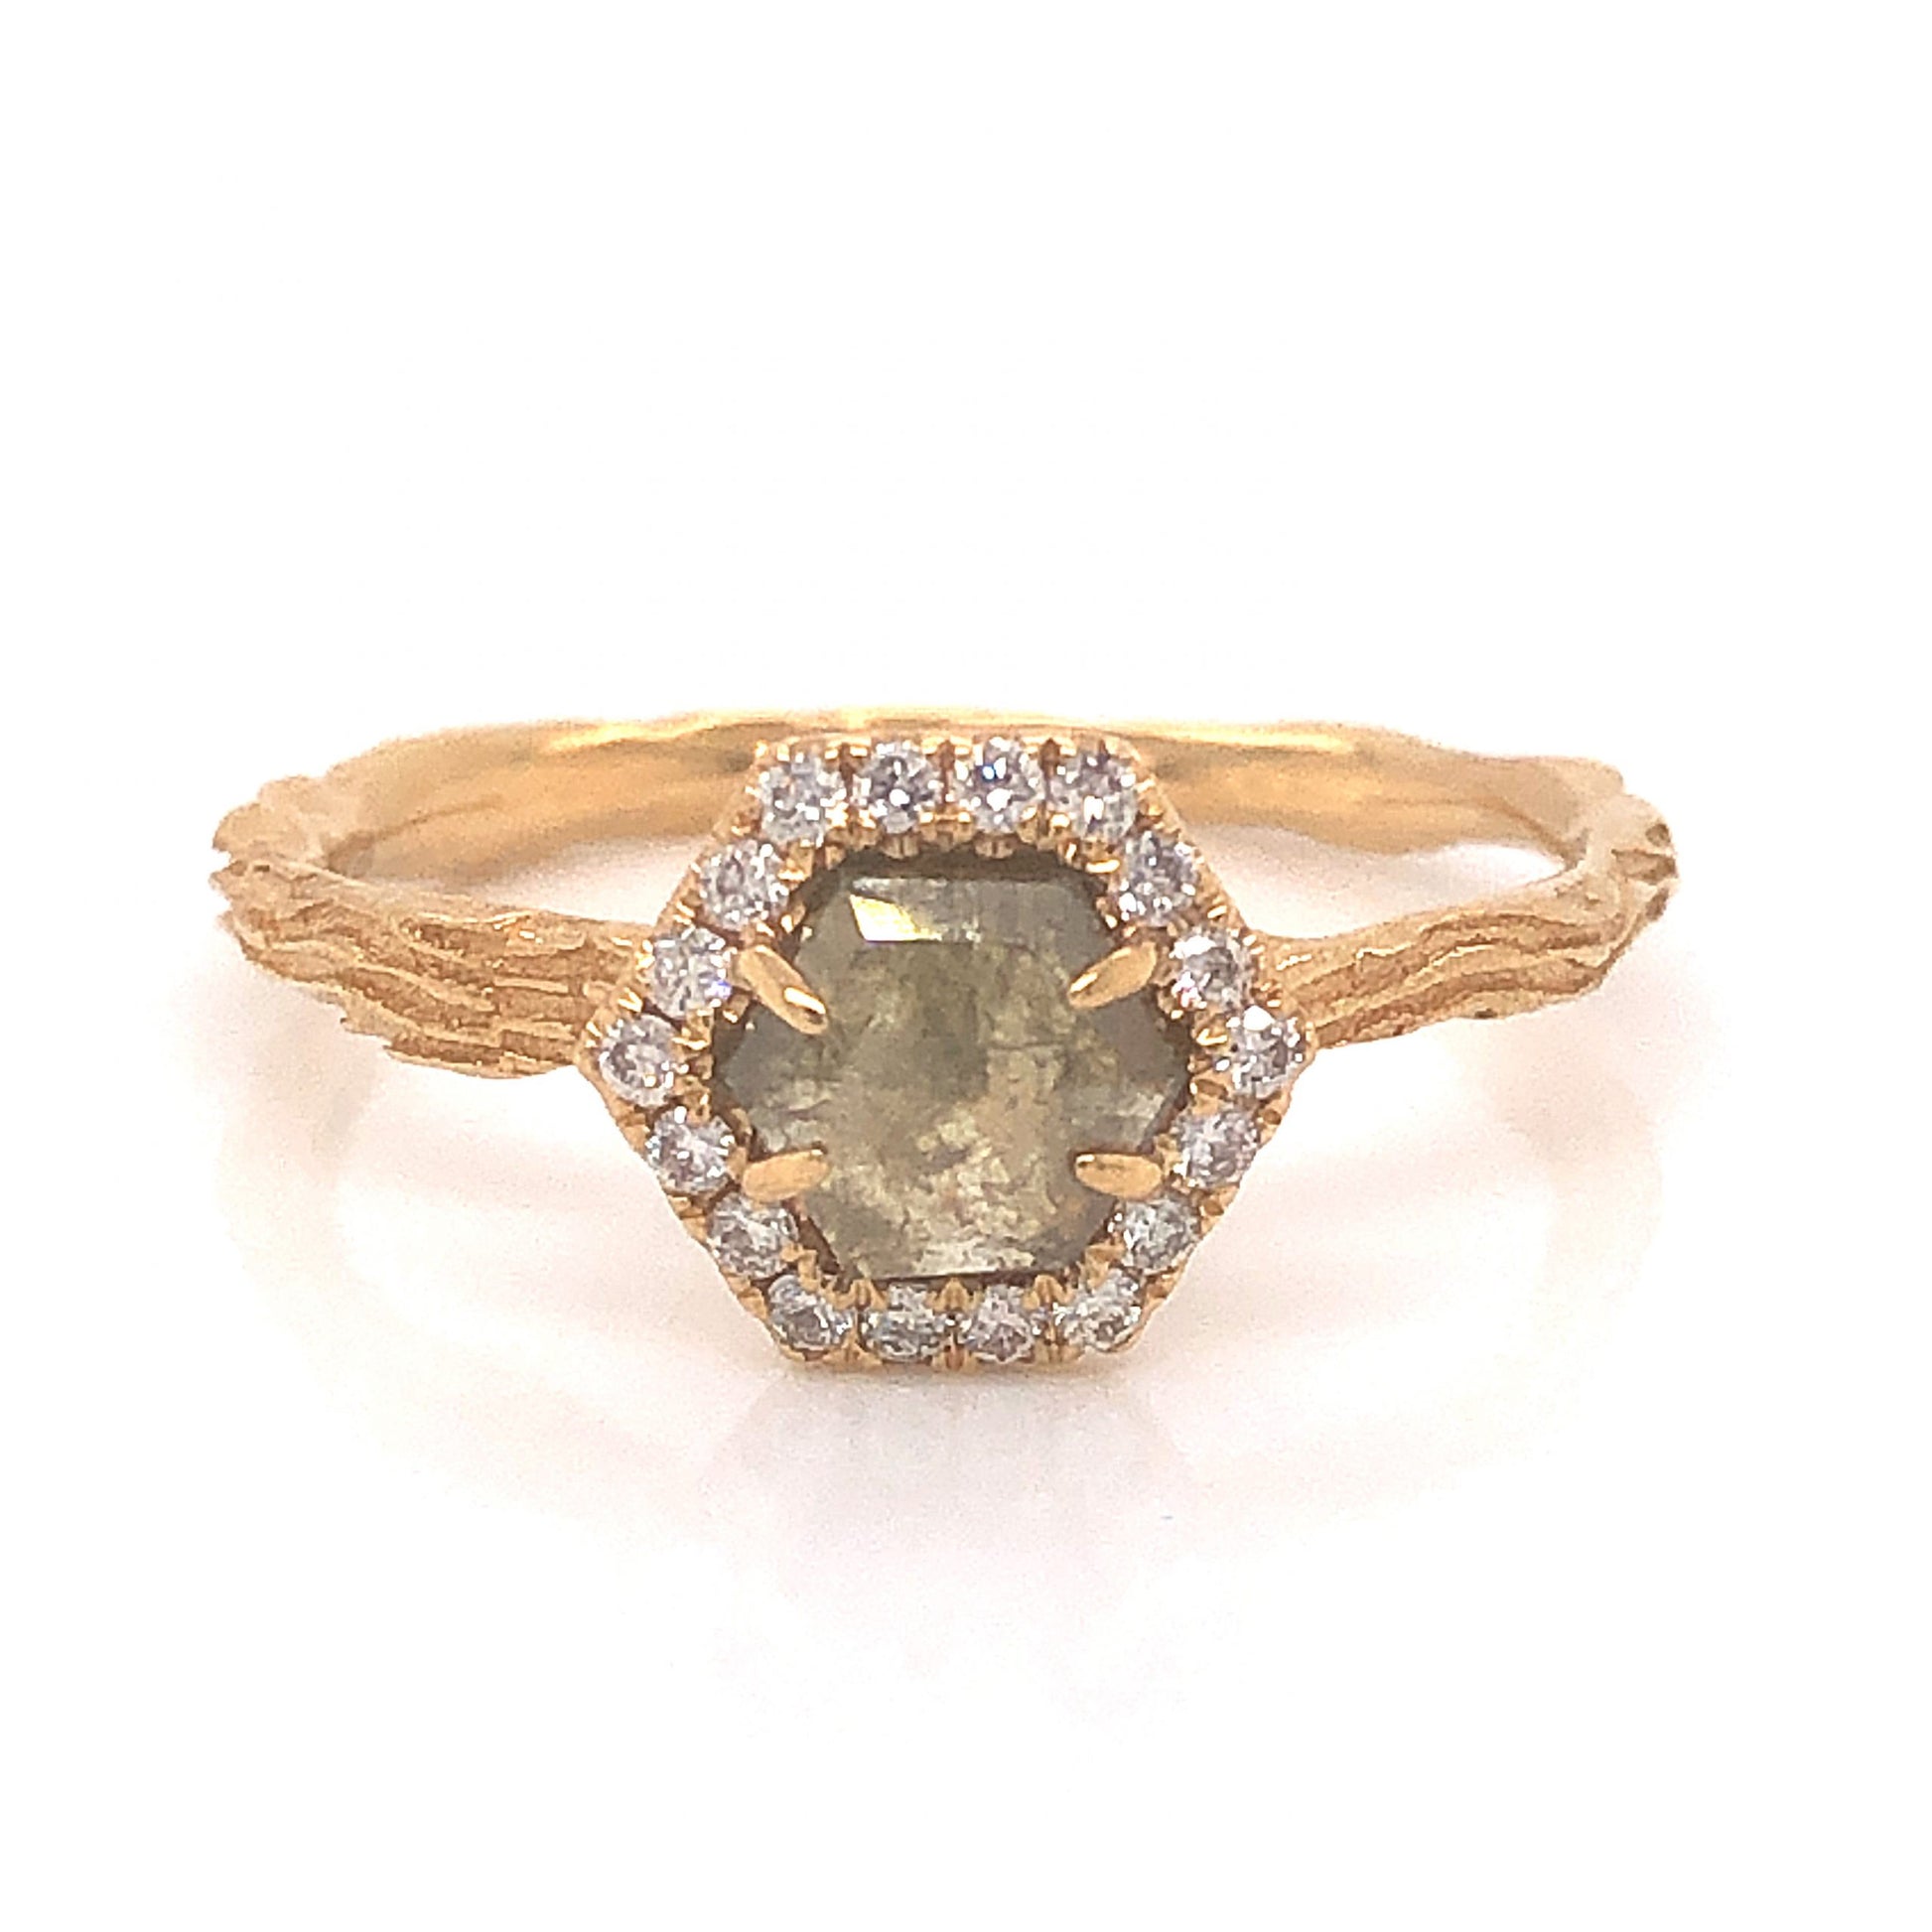 Hexagon Rustic Diamond Engagement Ring in 18k Yellow GoldComposition: 18 Karat Yellow GoldRing Size: 6.5Total Diamond Weight: .69 ctTotal Gram Weight: 2.5 gInscription: JHK 18k 750